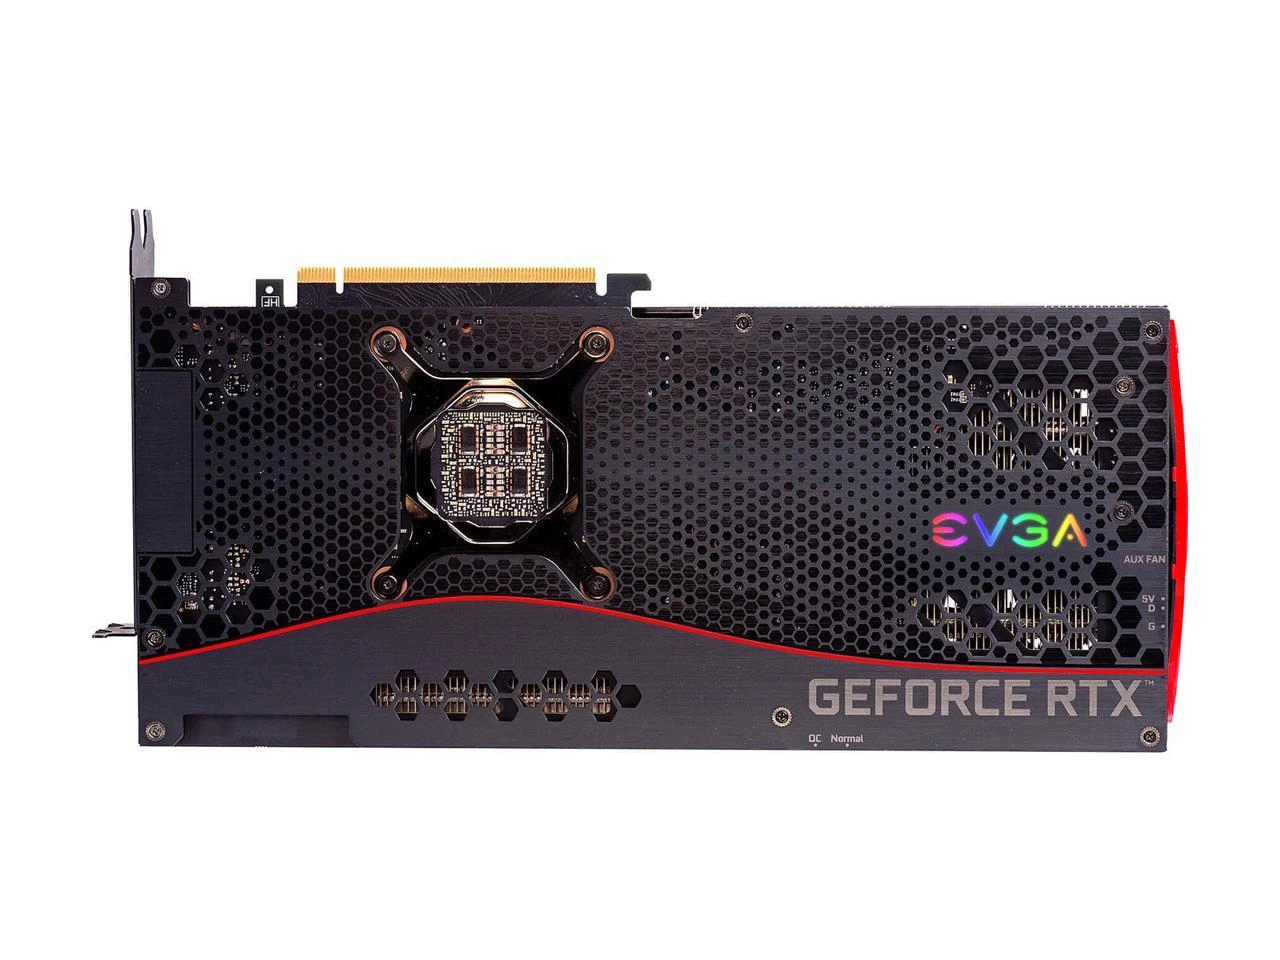 EVGA GeForce RTX 3080 FTW3 10GB Behind View